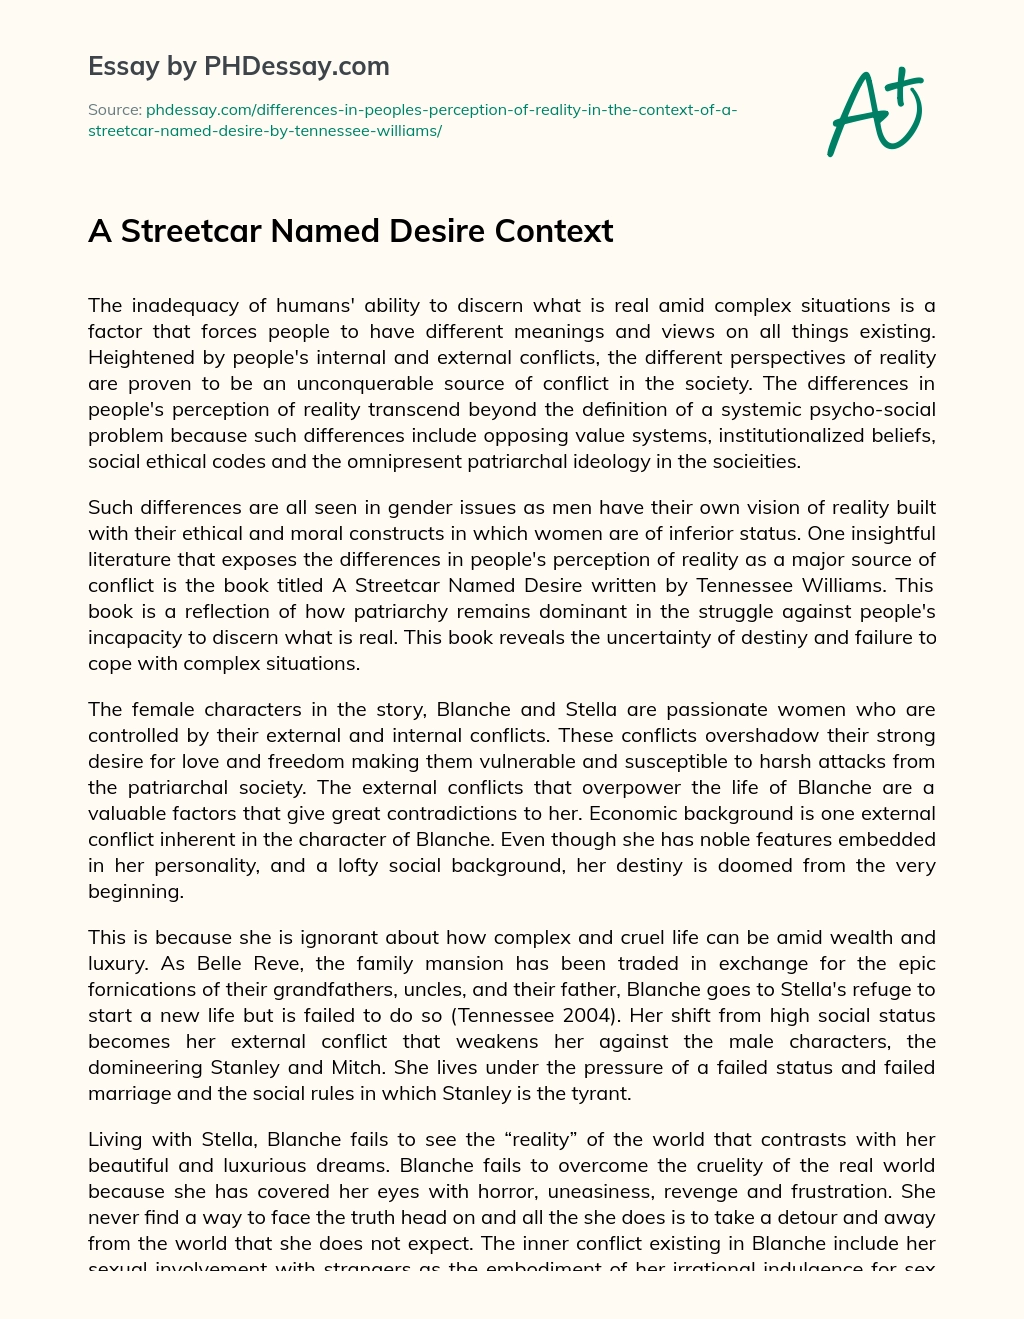 A Streetcar Named Desire Context essay